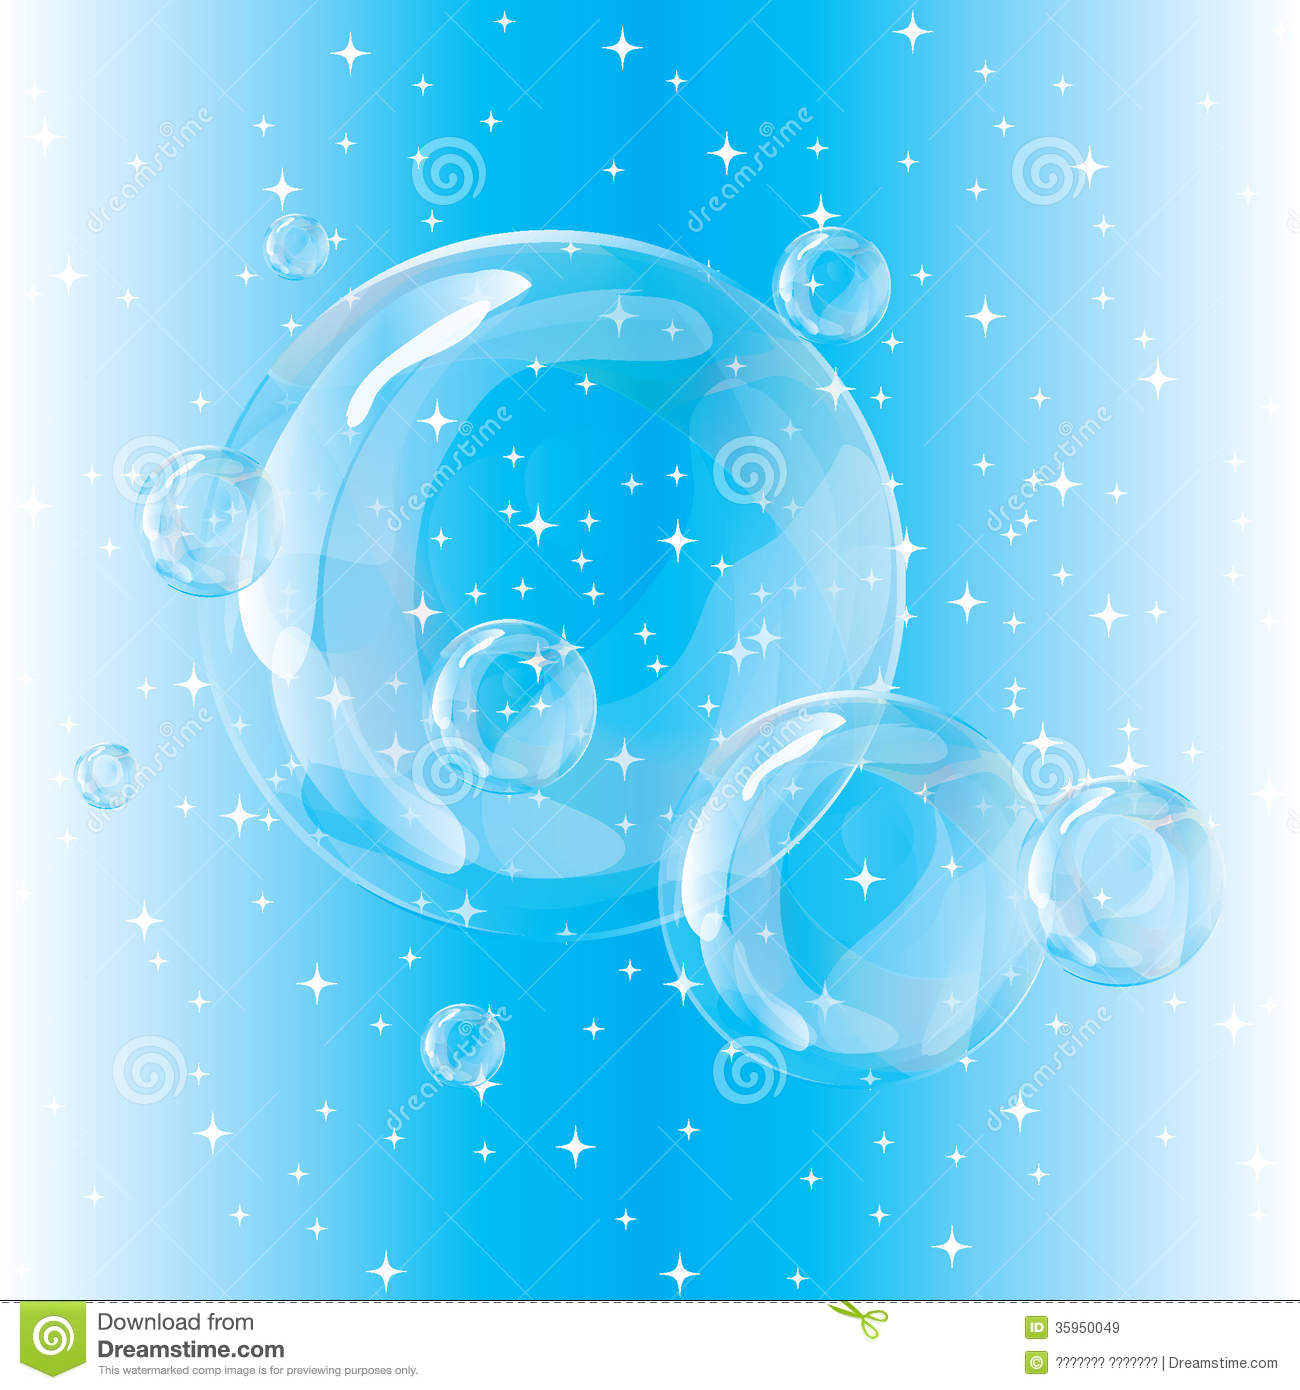 White Sparkles and Bubbles